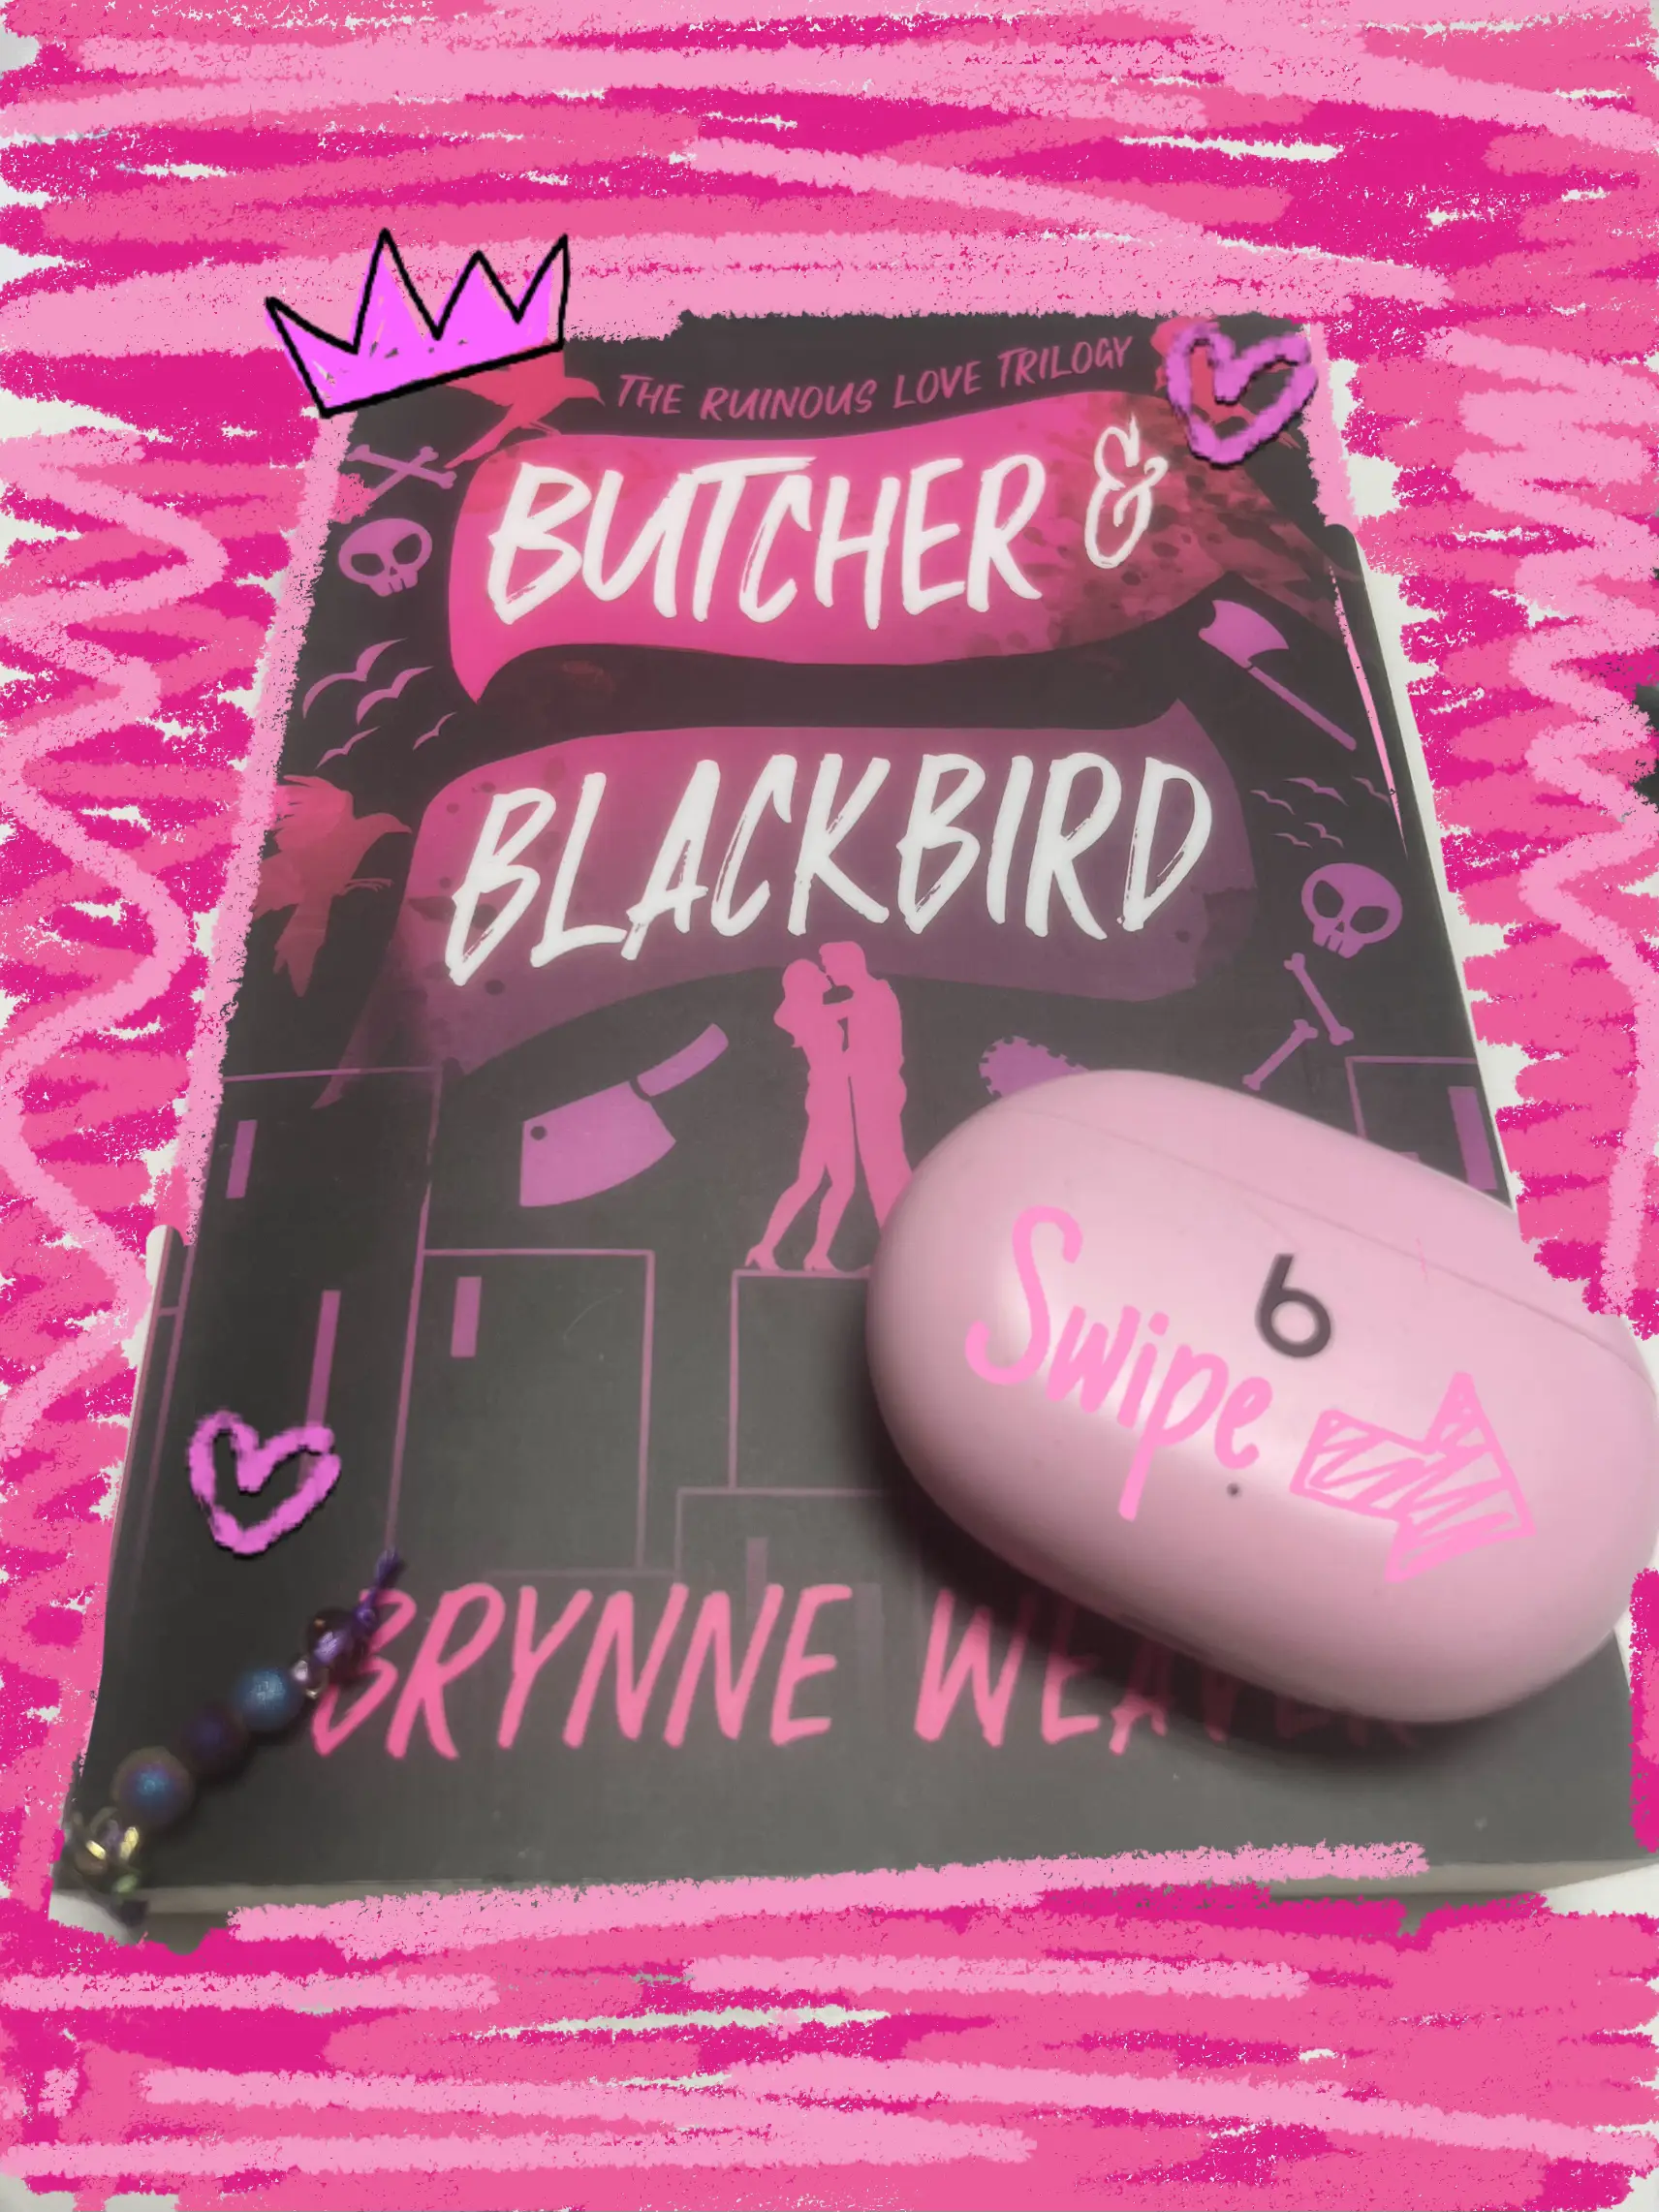 Full review of Butcher & Blackbird coming soon! Brynne Weaver wrote ye, Dark Romance Books